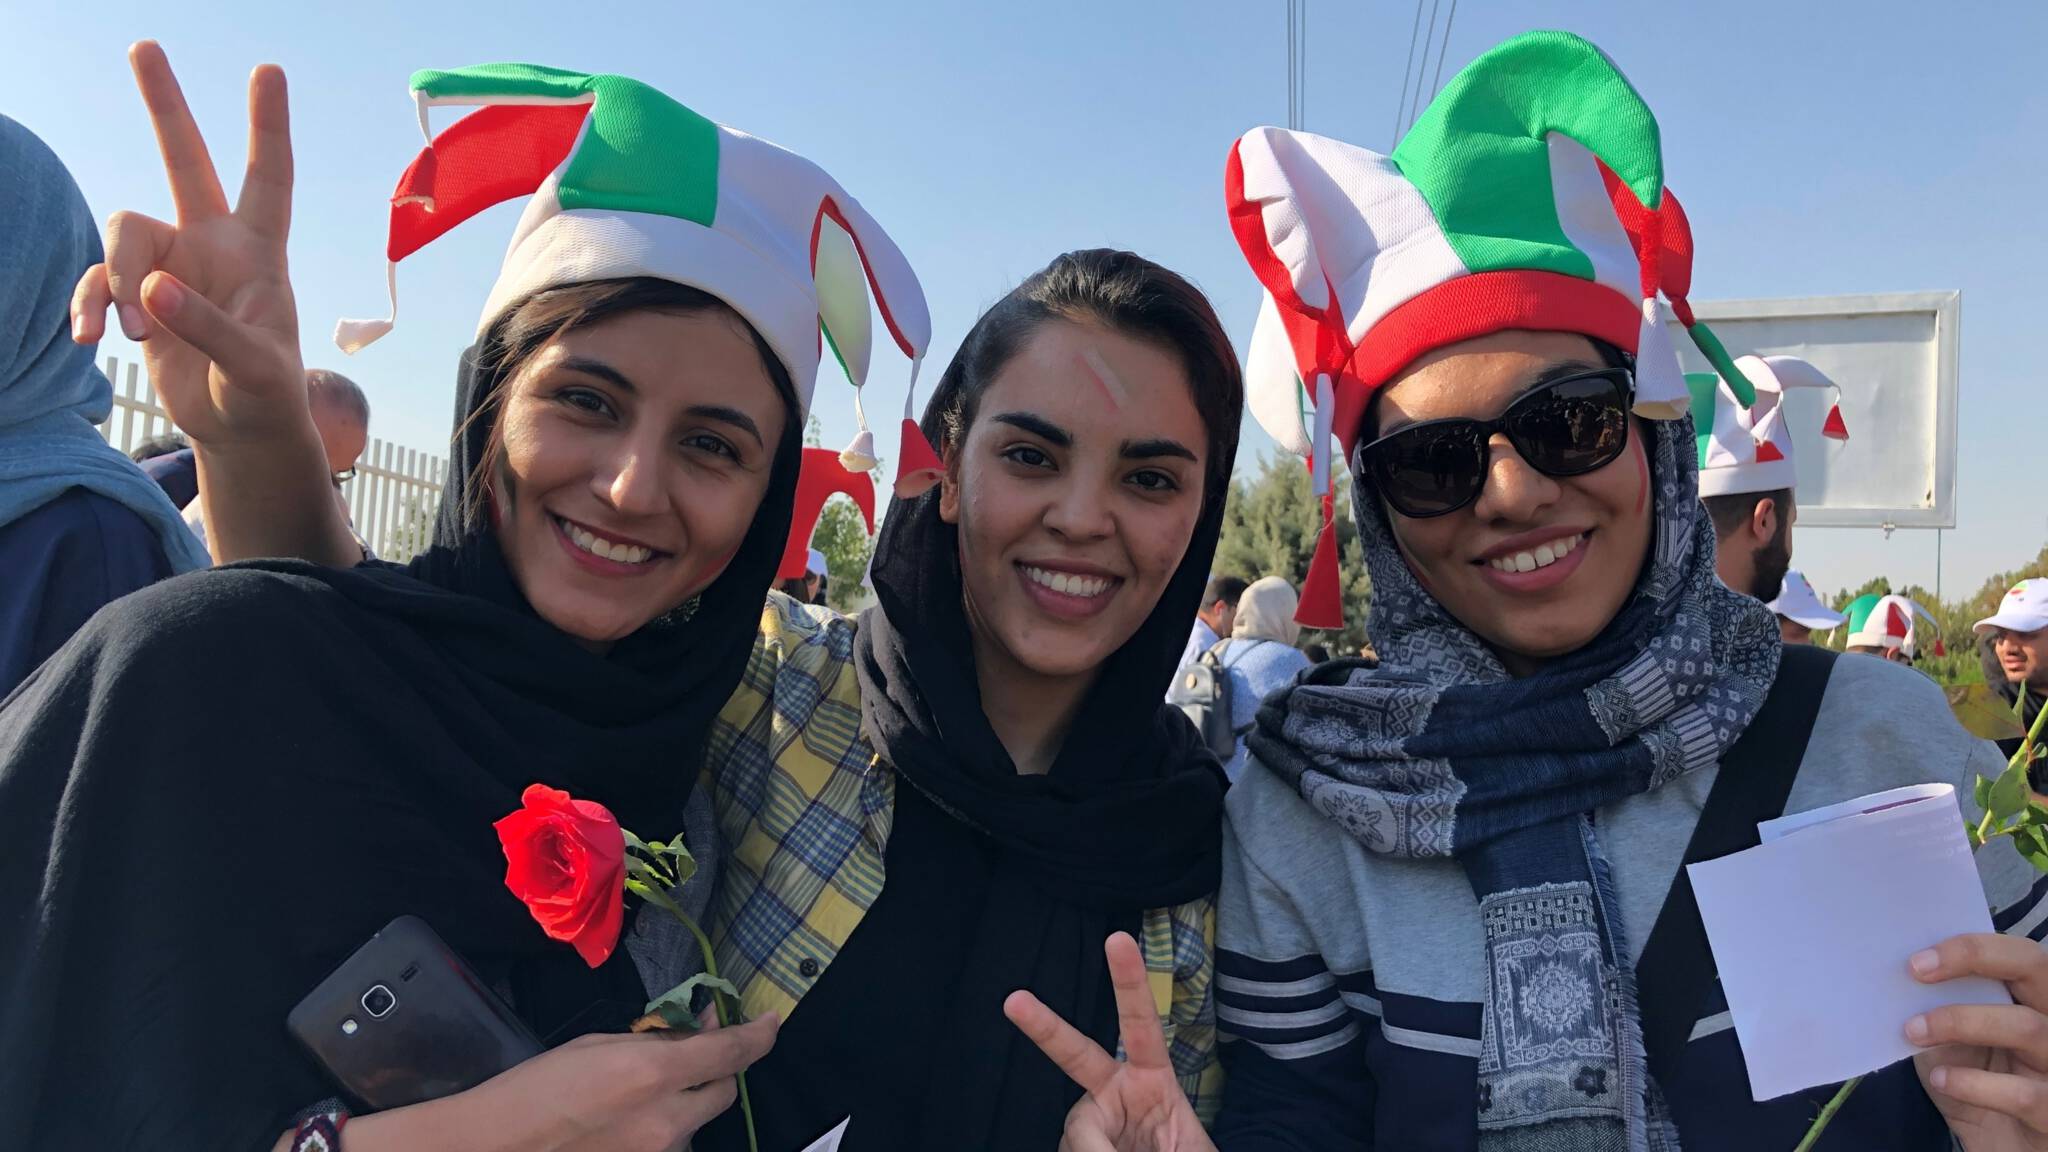 Iranian women fans in the stadium, photo by NOS / Marcel van der Steen